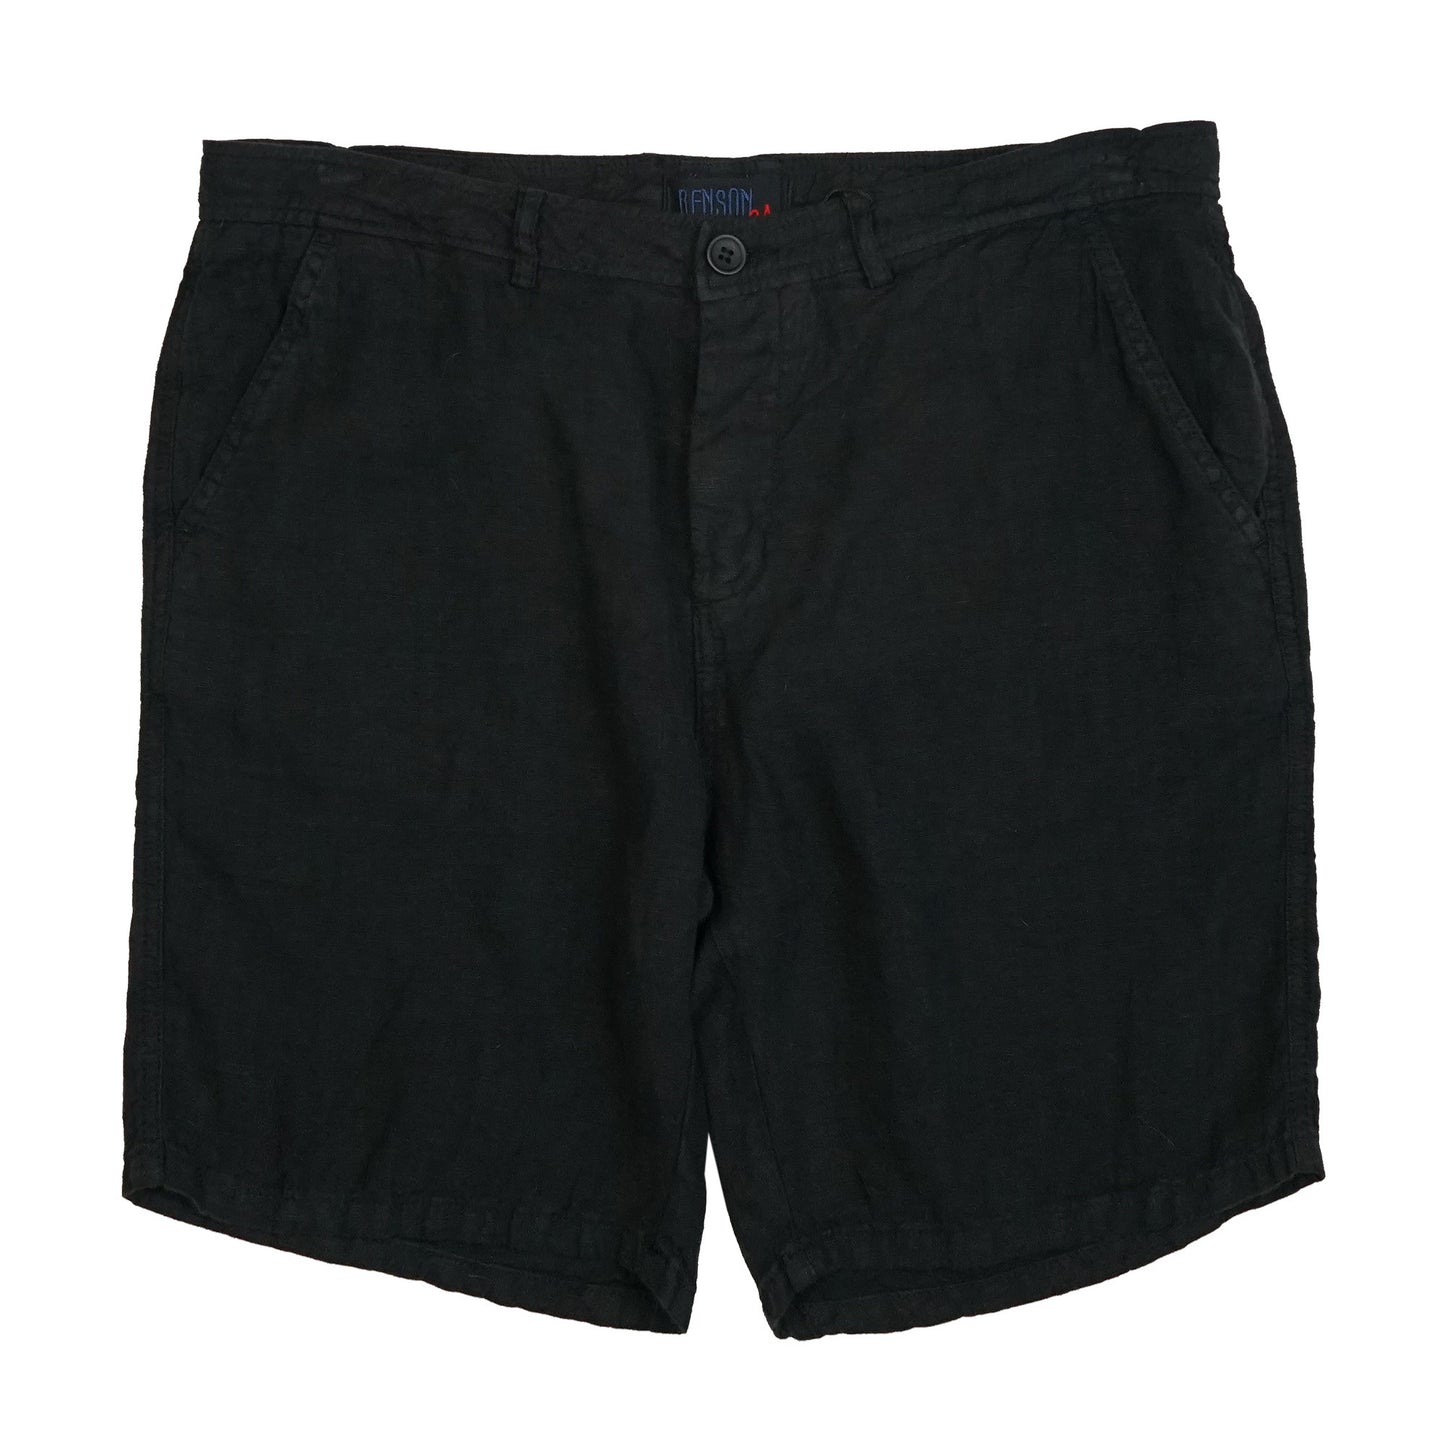 Palm Springs Black Linen Shorts